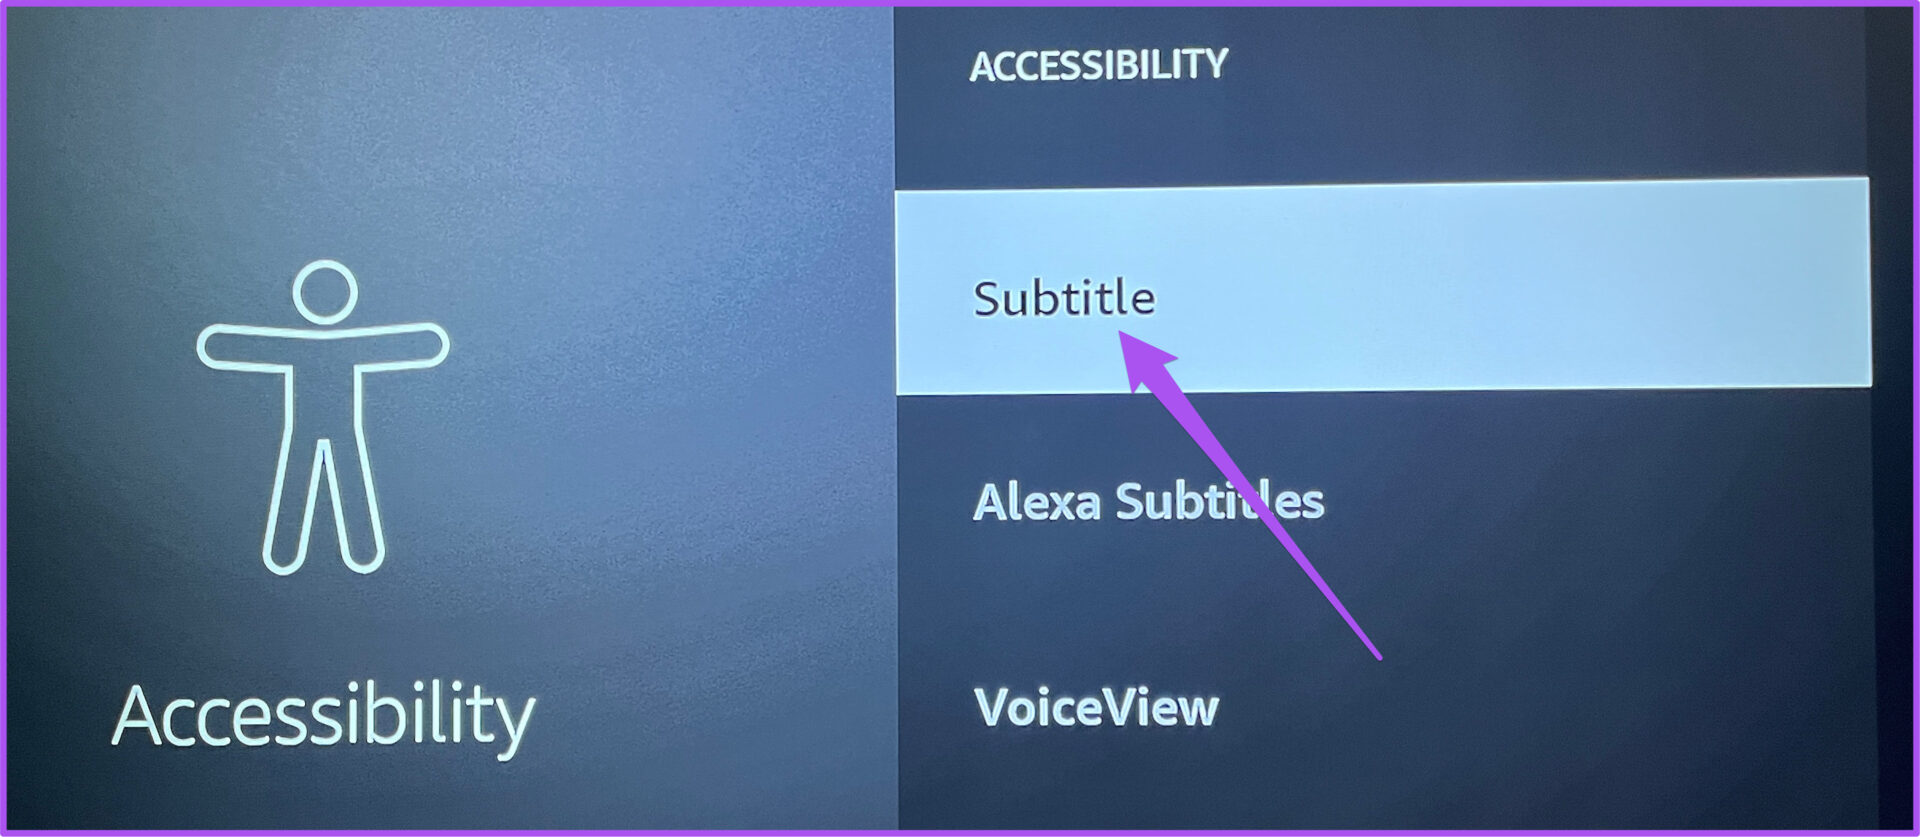 4 Best Ways to Manage Subtitle Settings on Amazon Fire TV Stick - 46